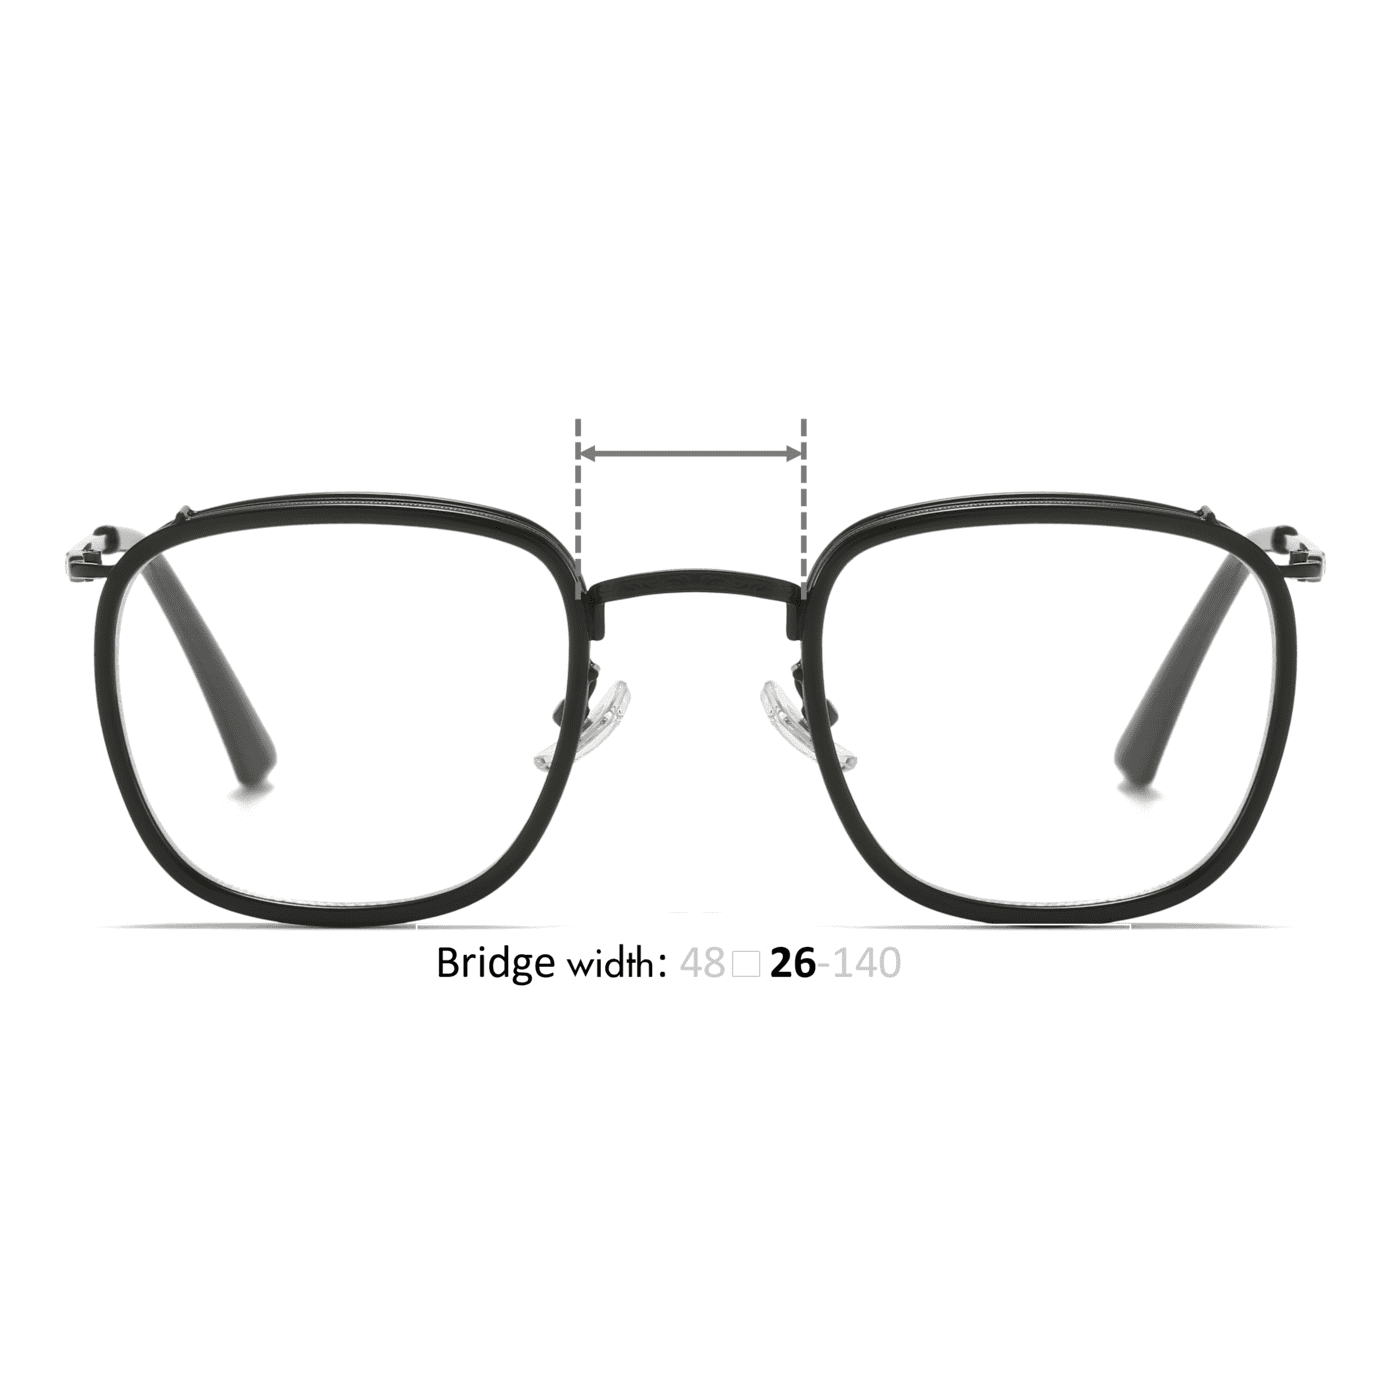 GV Glasses bridge width